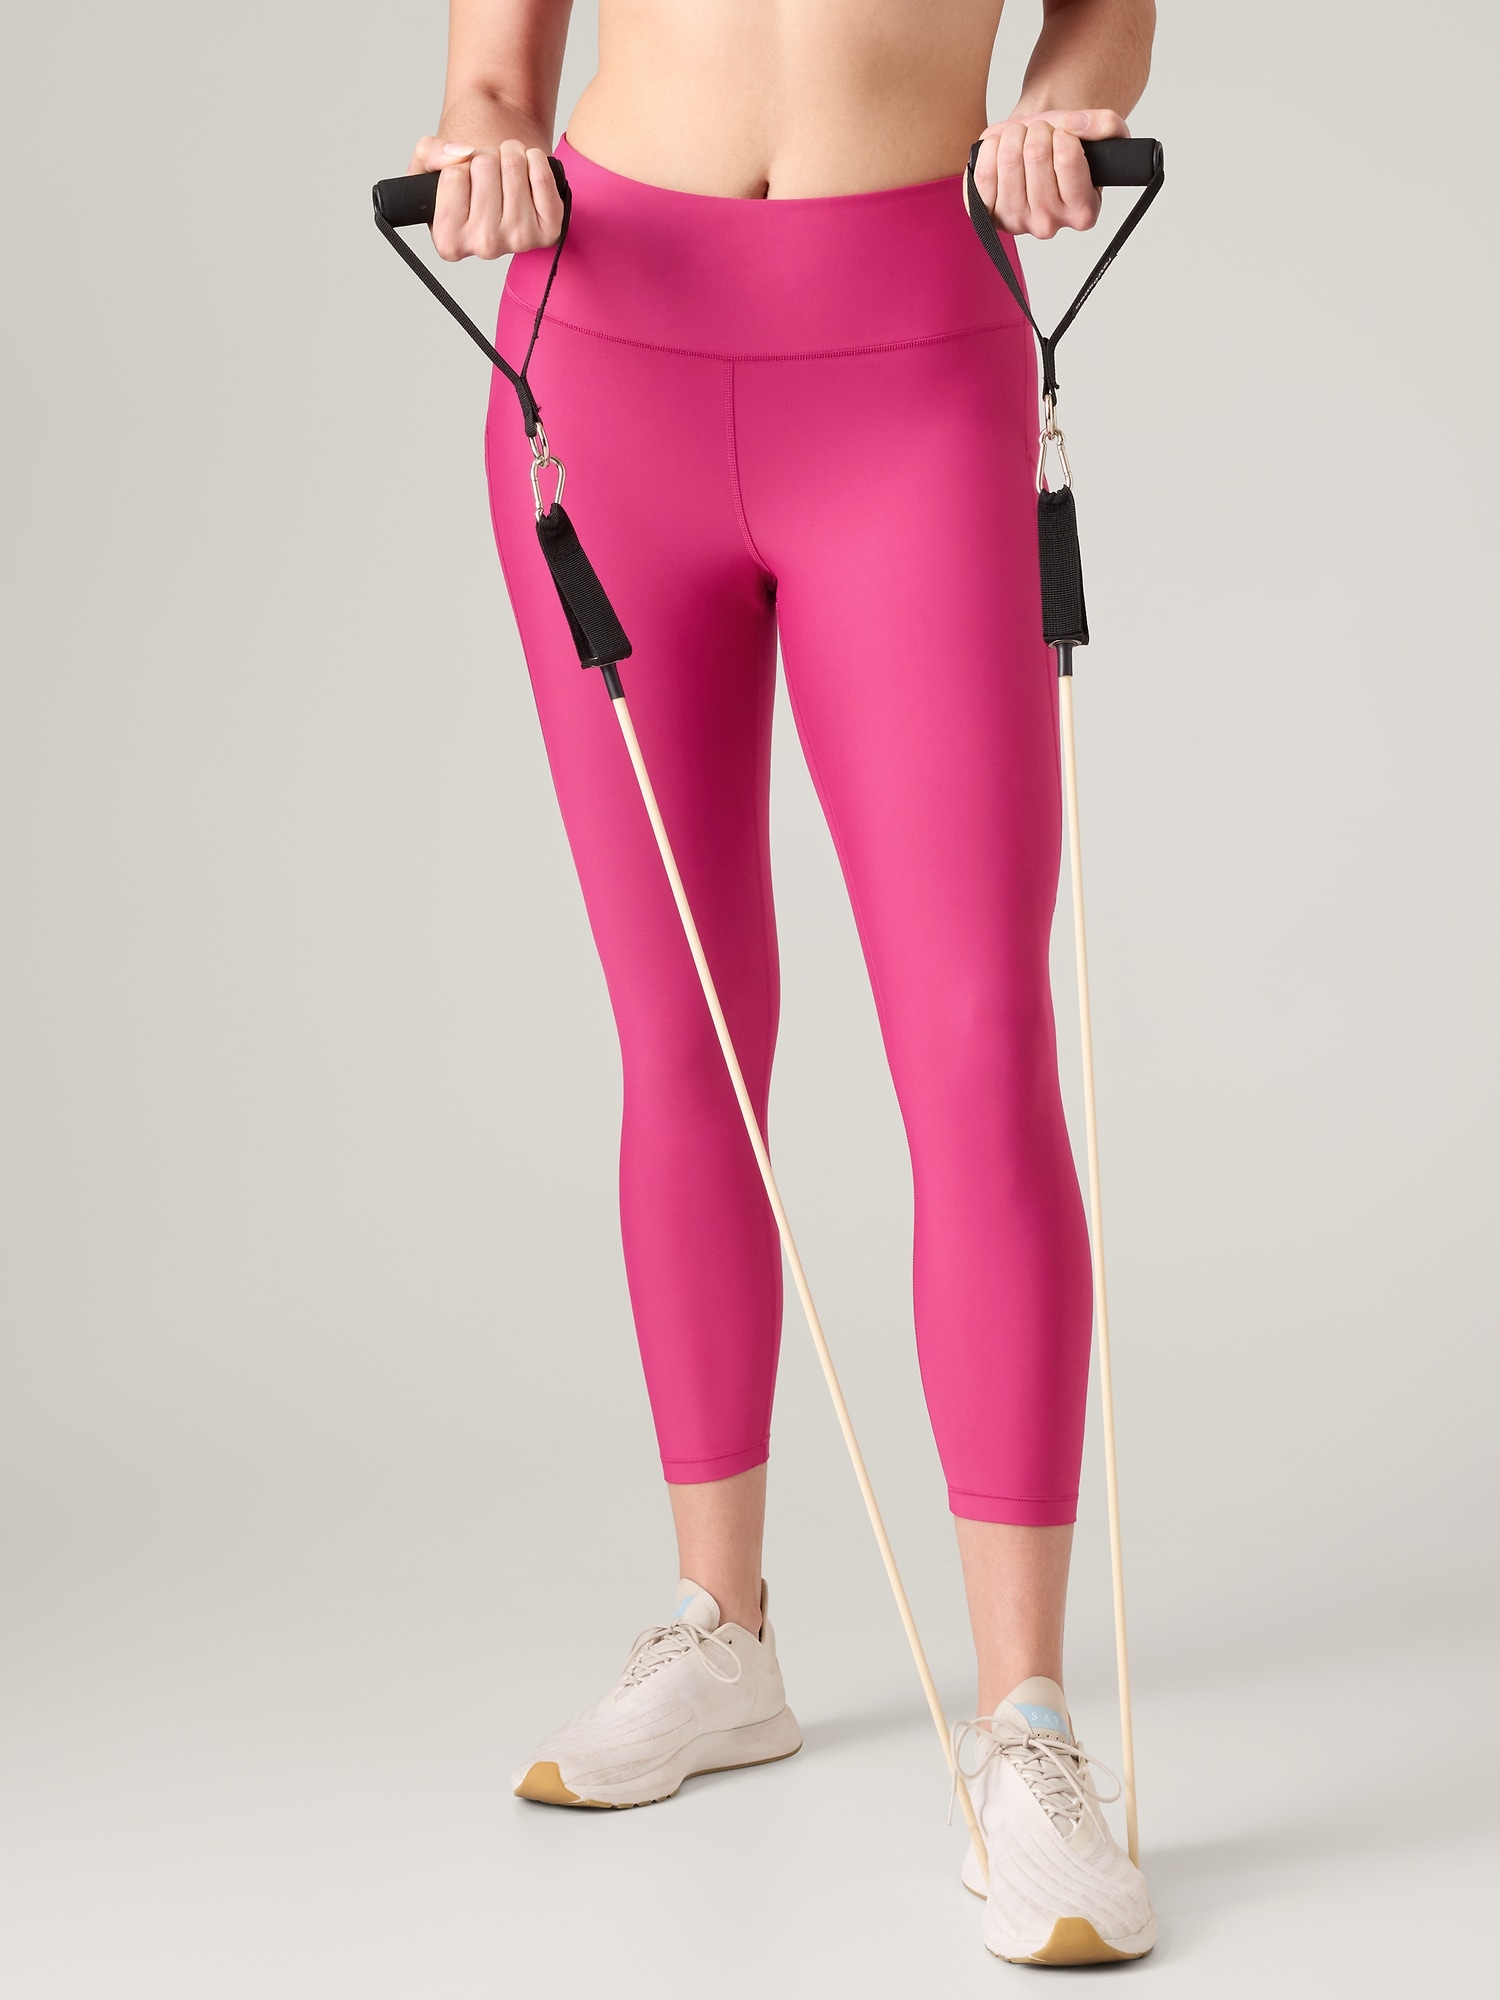 Athleta legging small pink - Gem